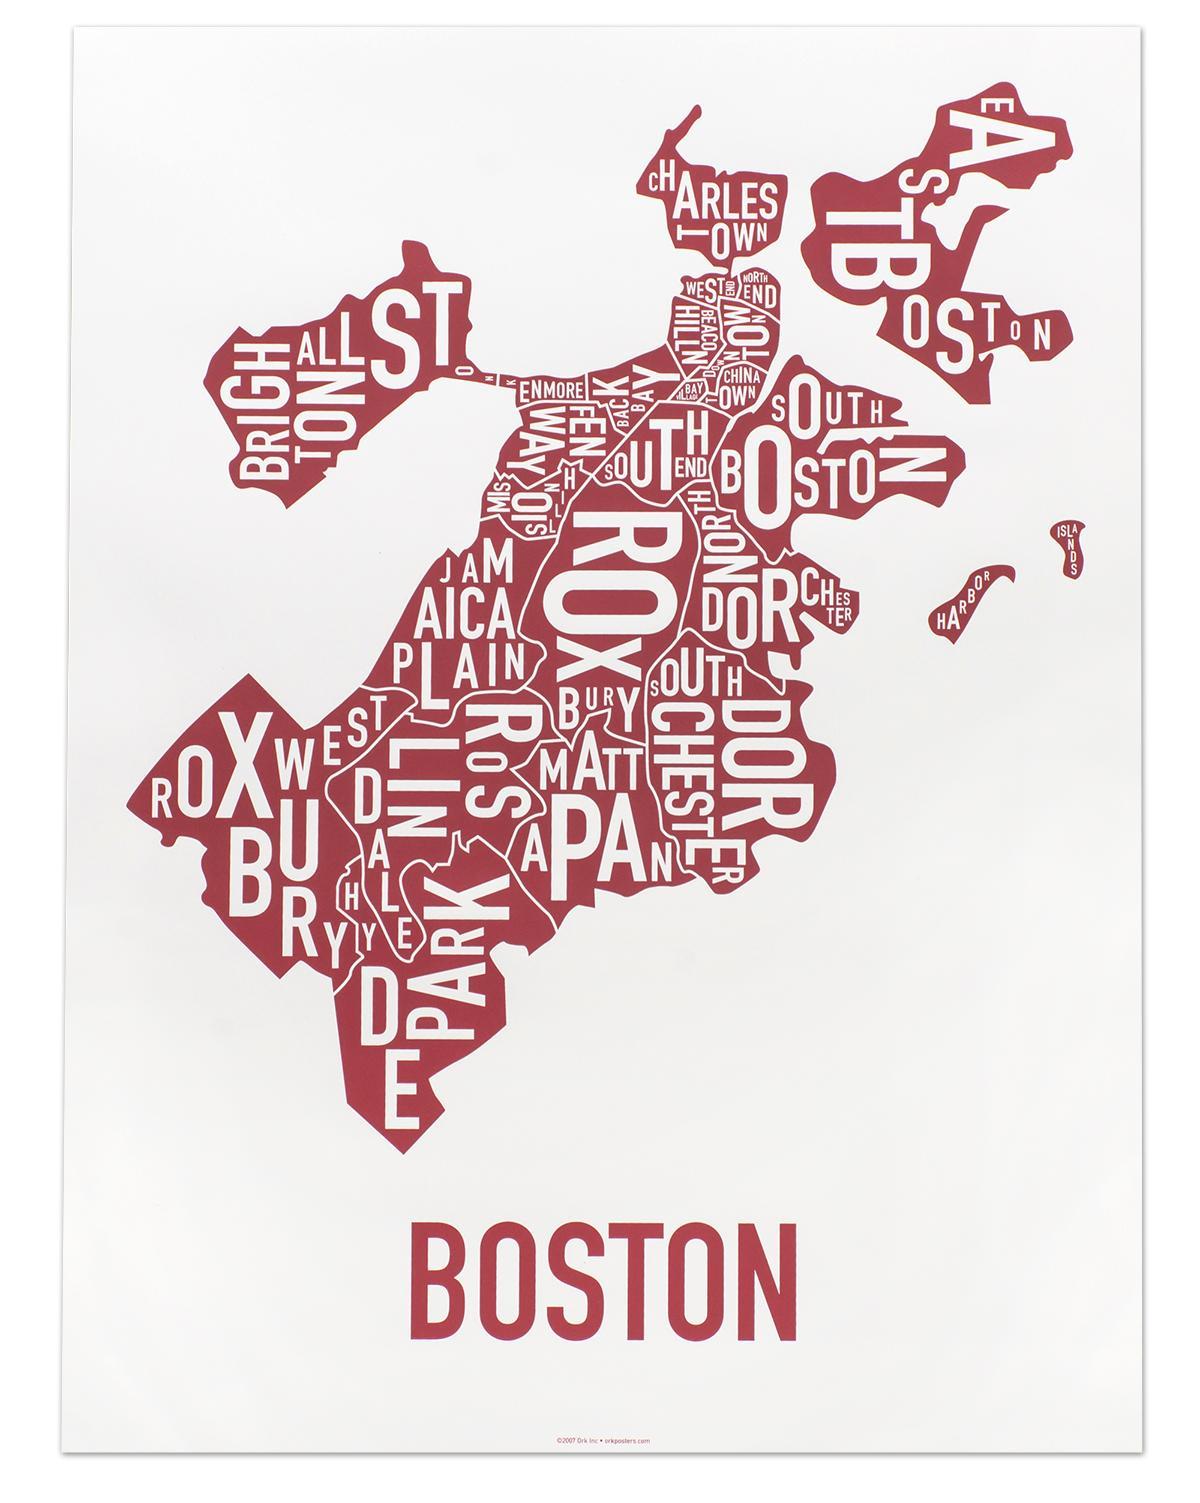 Boston hirian mapa